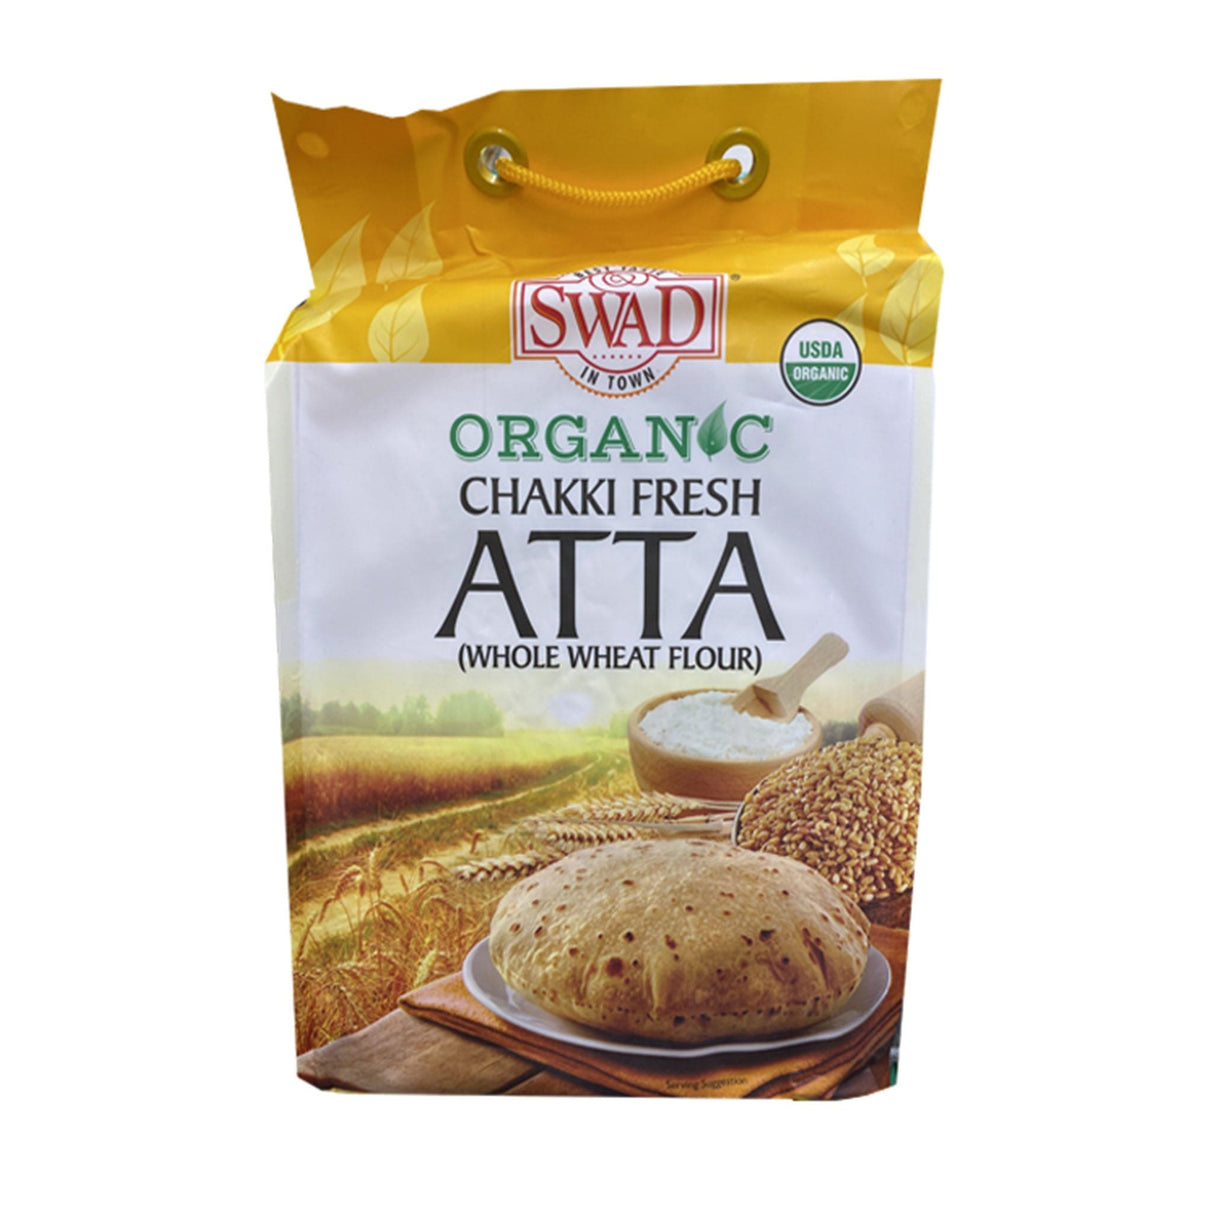 Swad Organic Chakki Fresh Atta (Whole Wheat Flour)